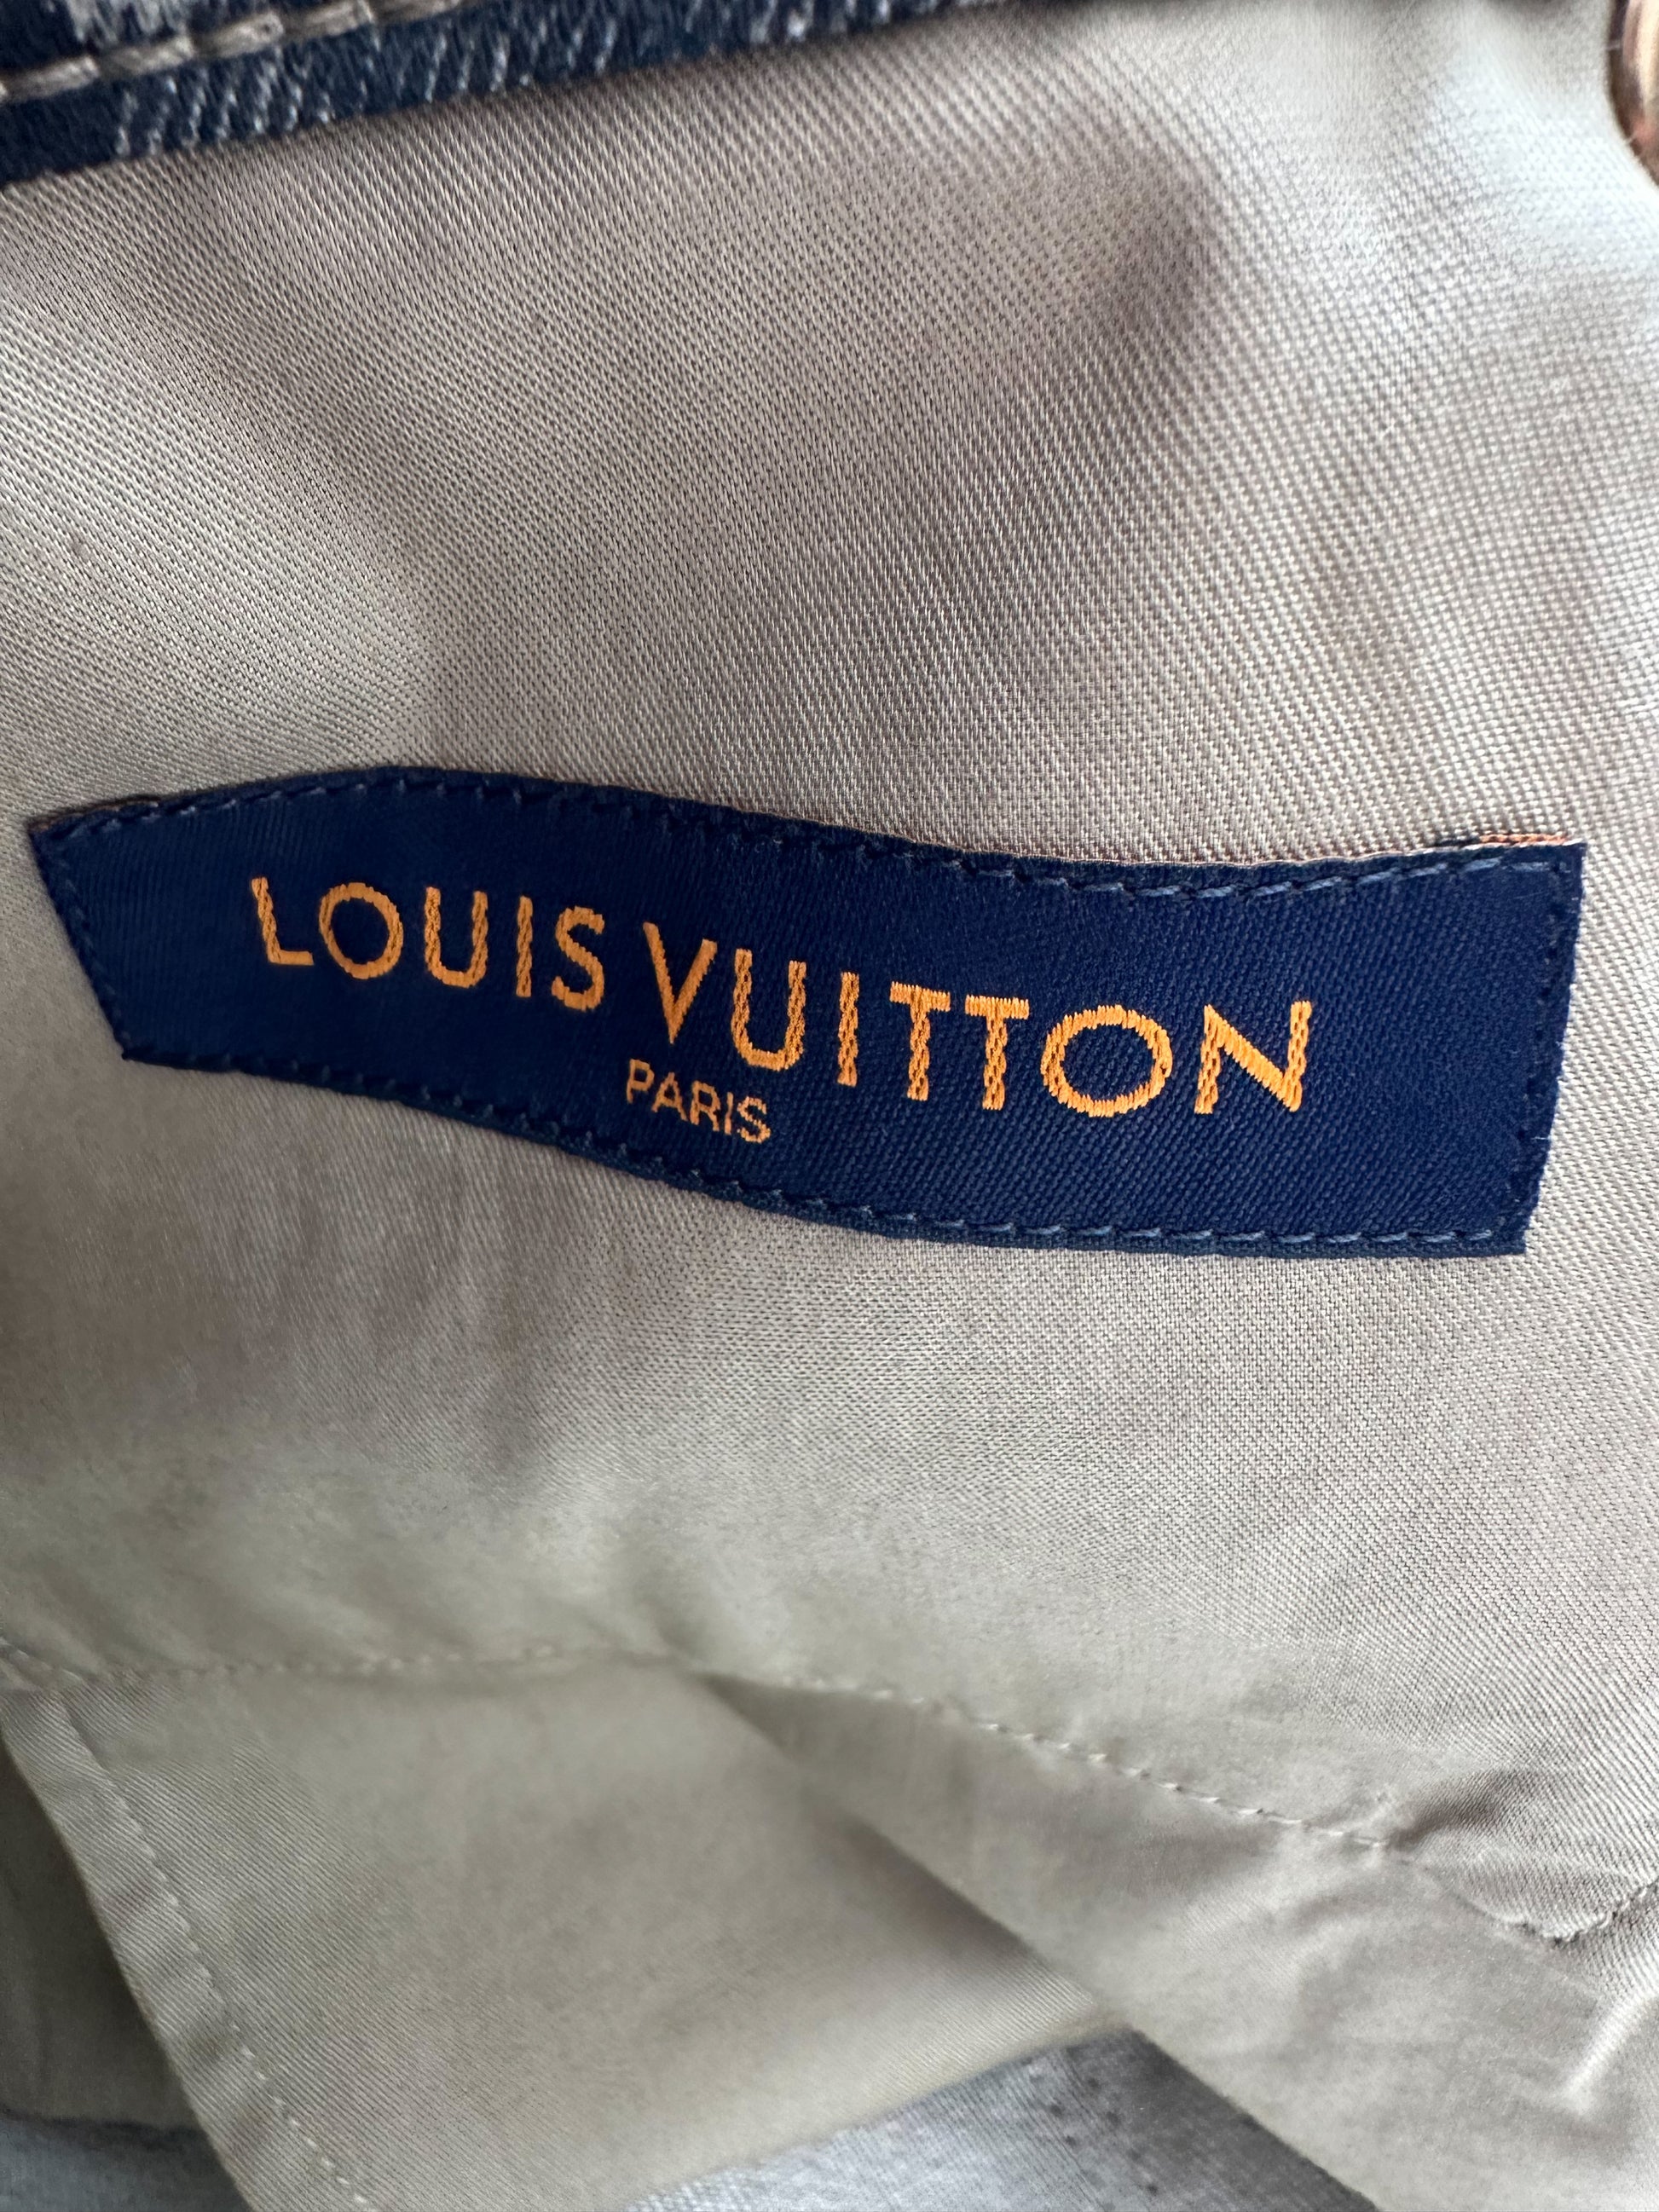 Louis Vuitton Tag 